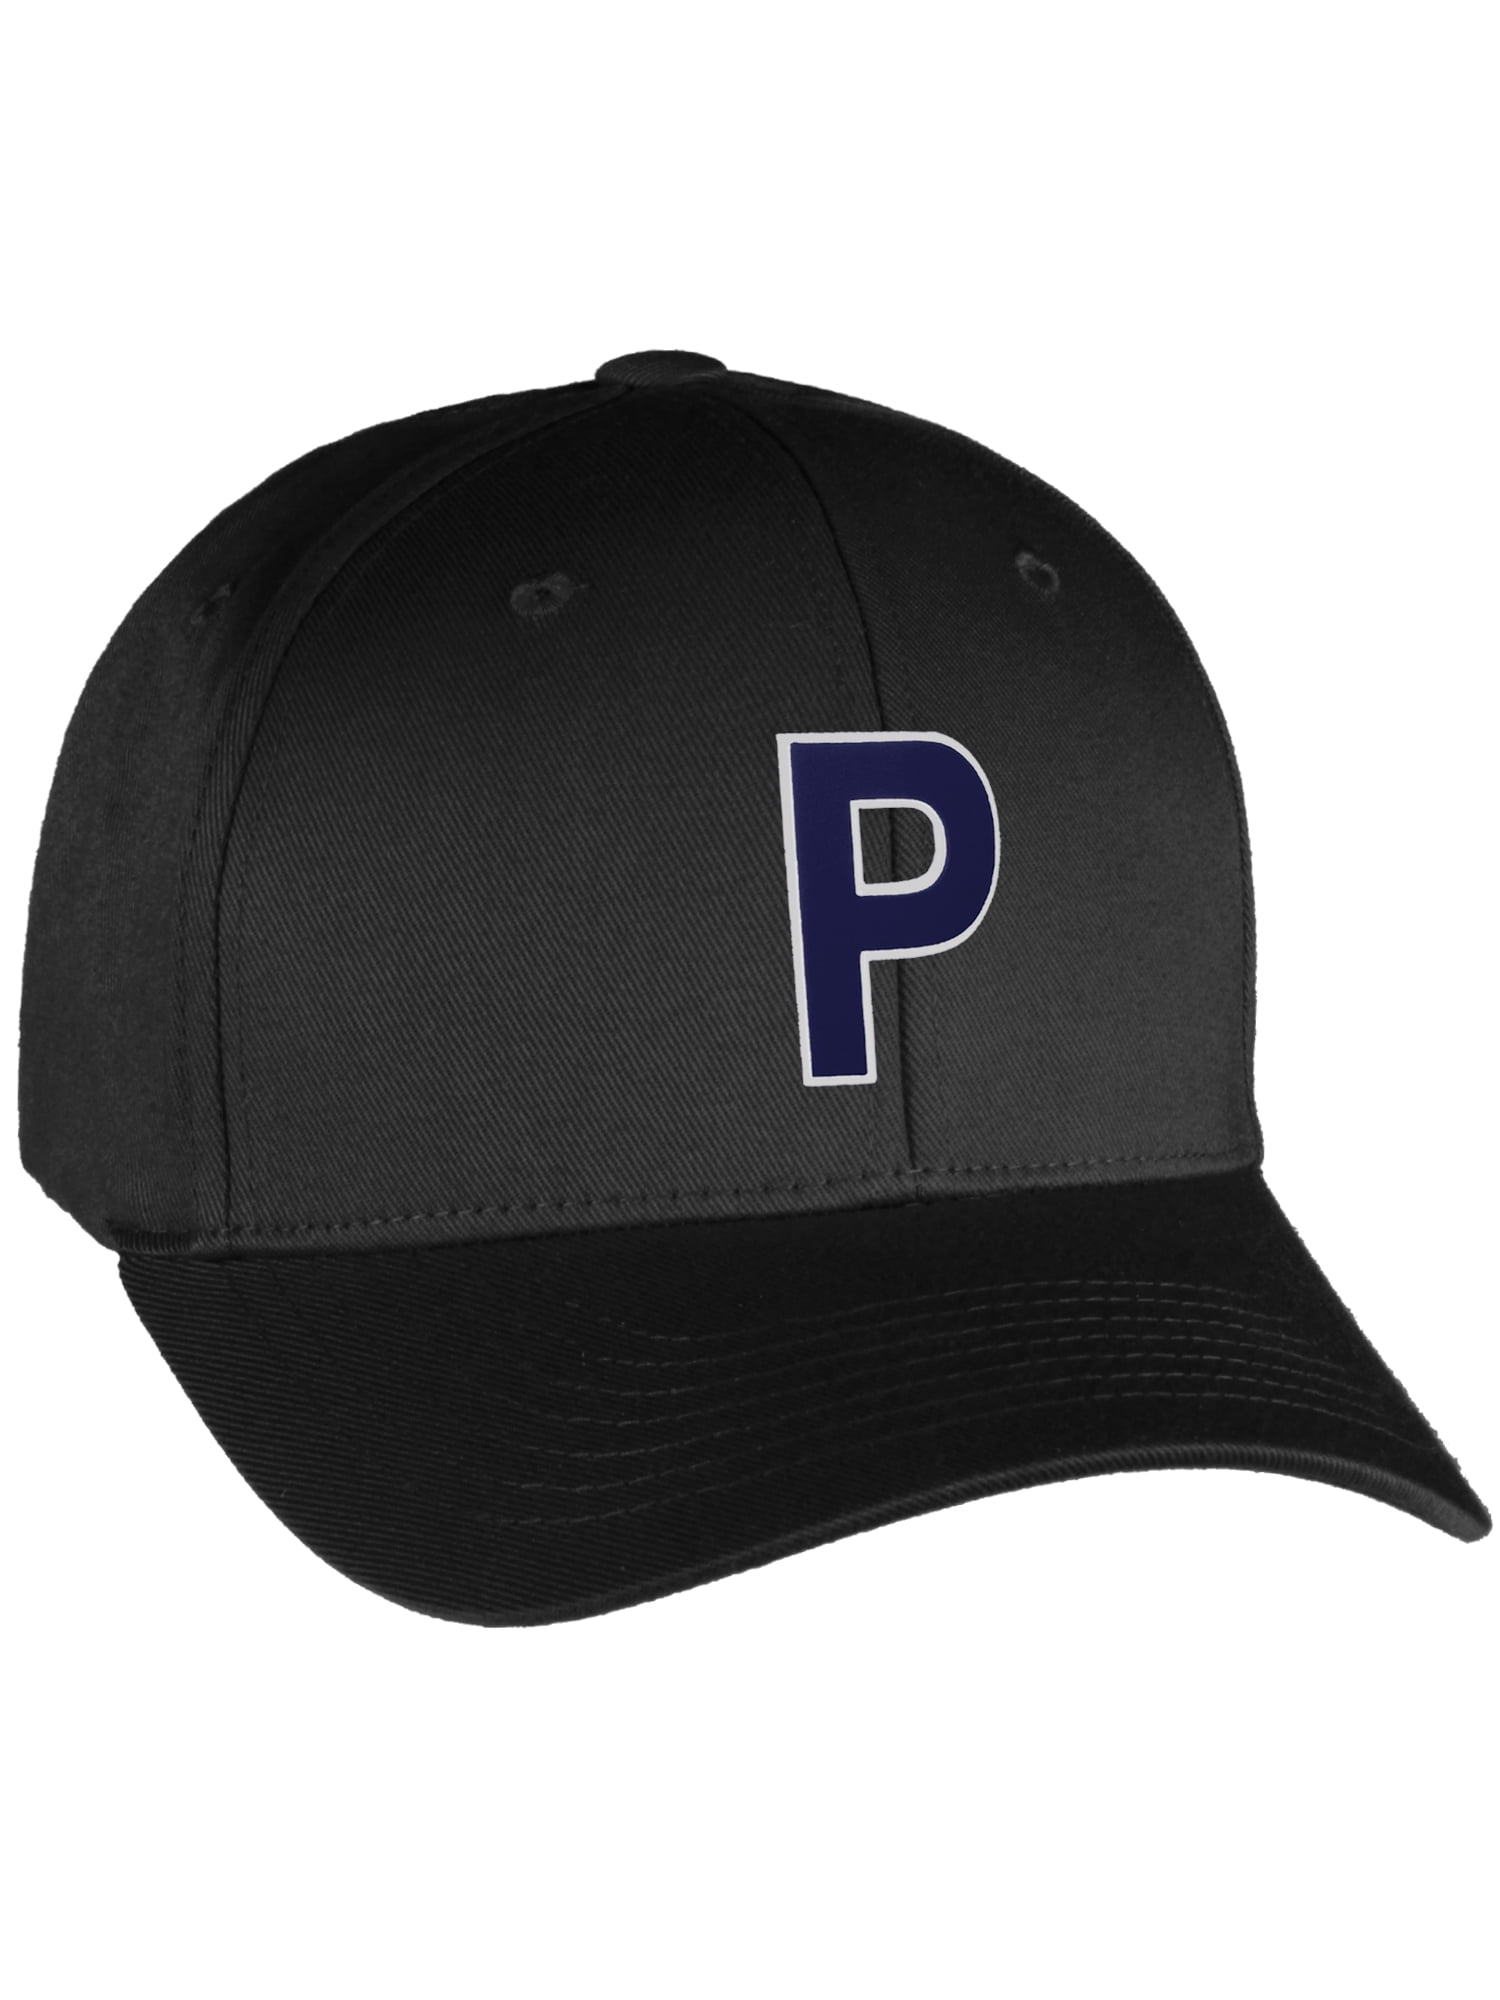 Flexfit Baseball Wh Black to Custom Z Hat Bill, Nv A Cap Initials Curved Letter